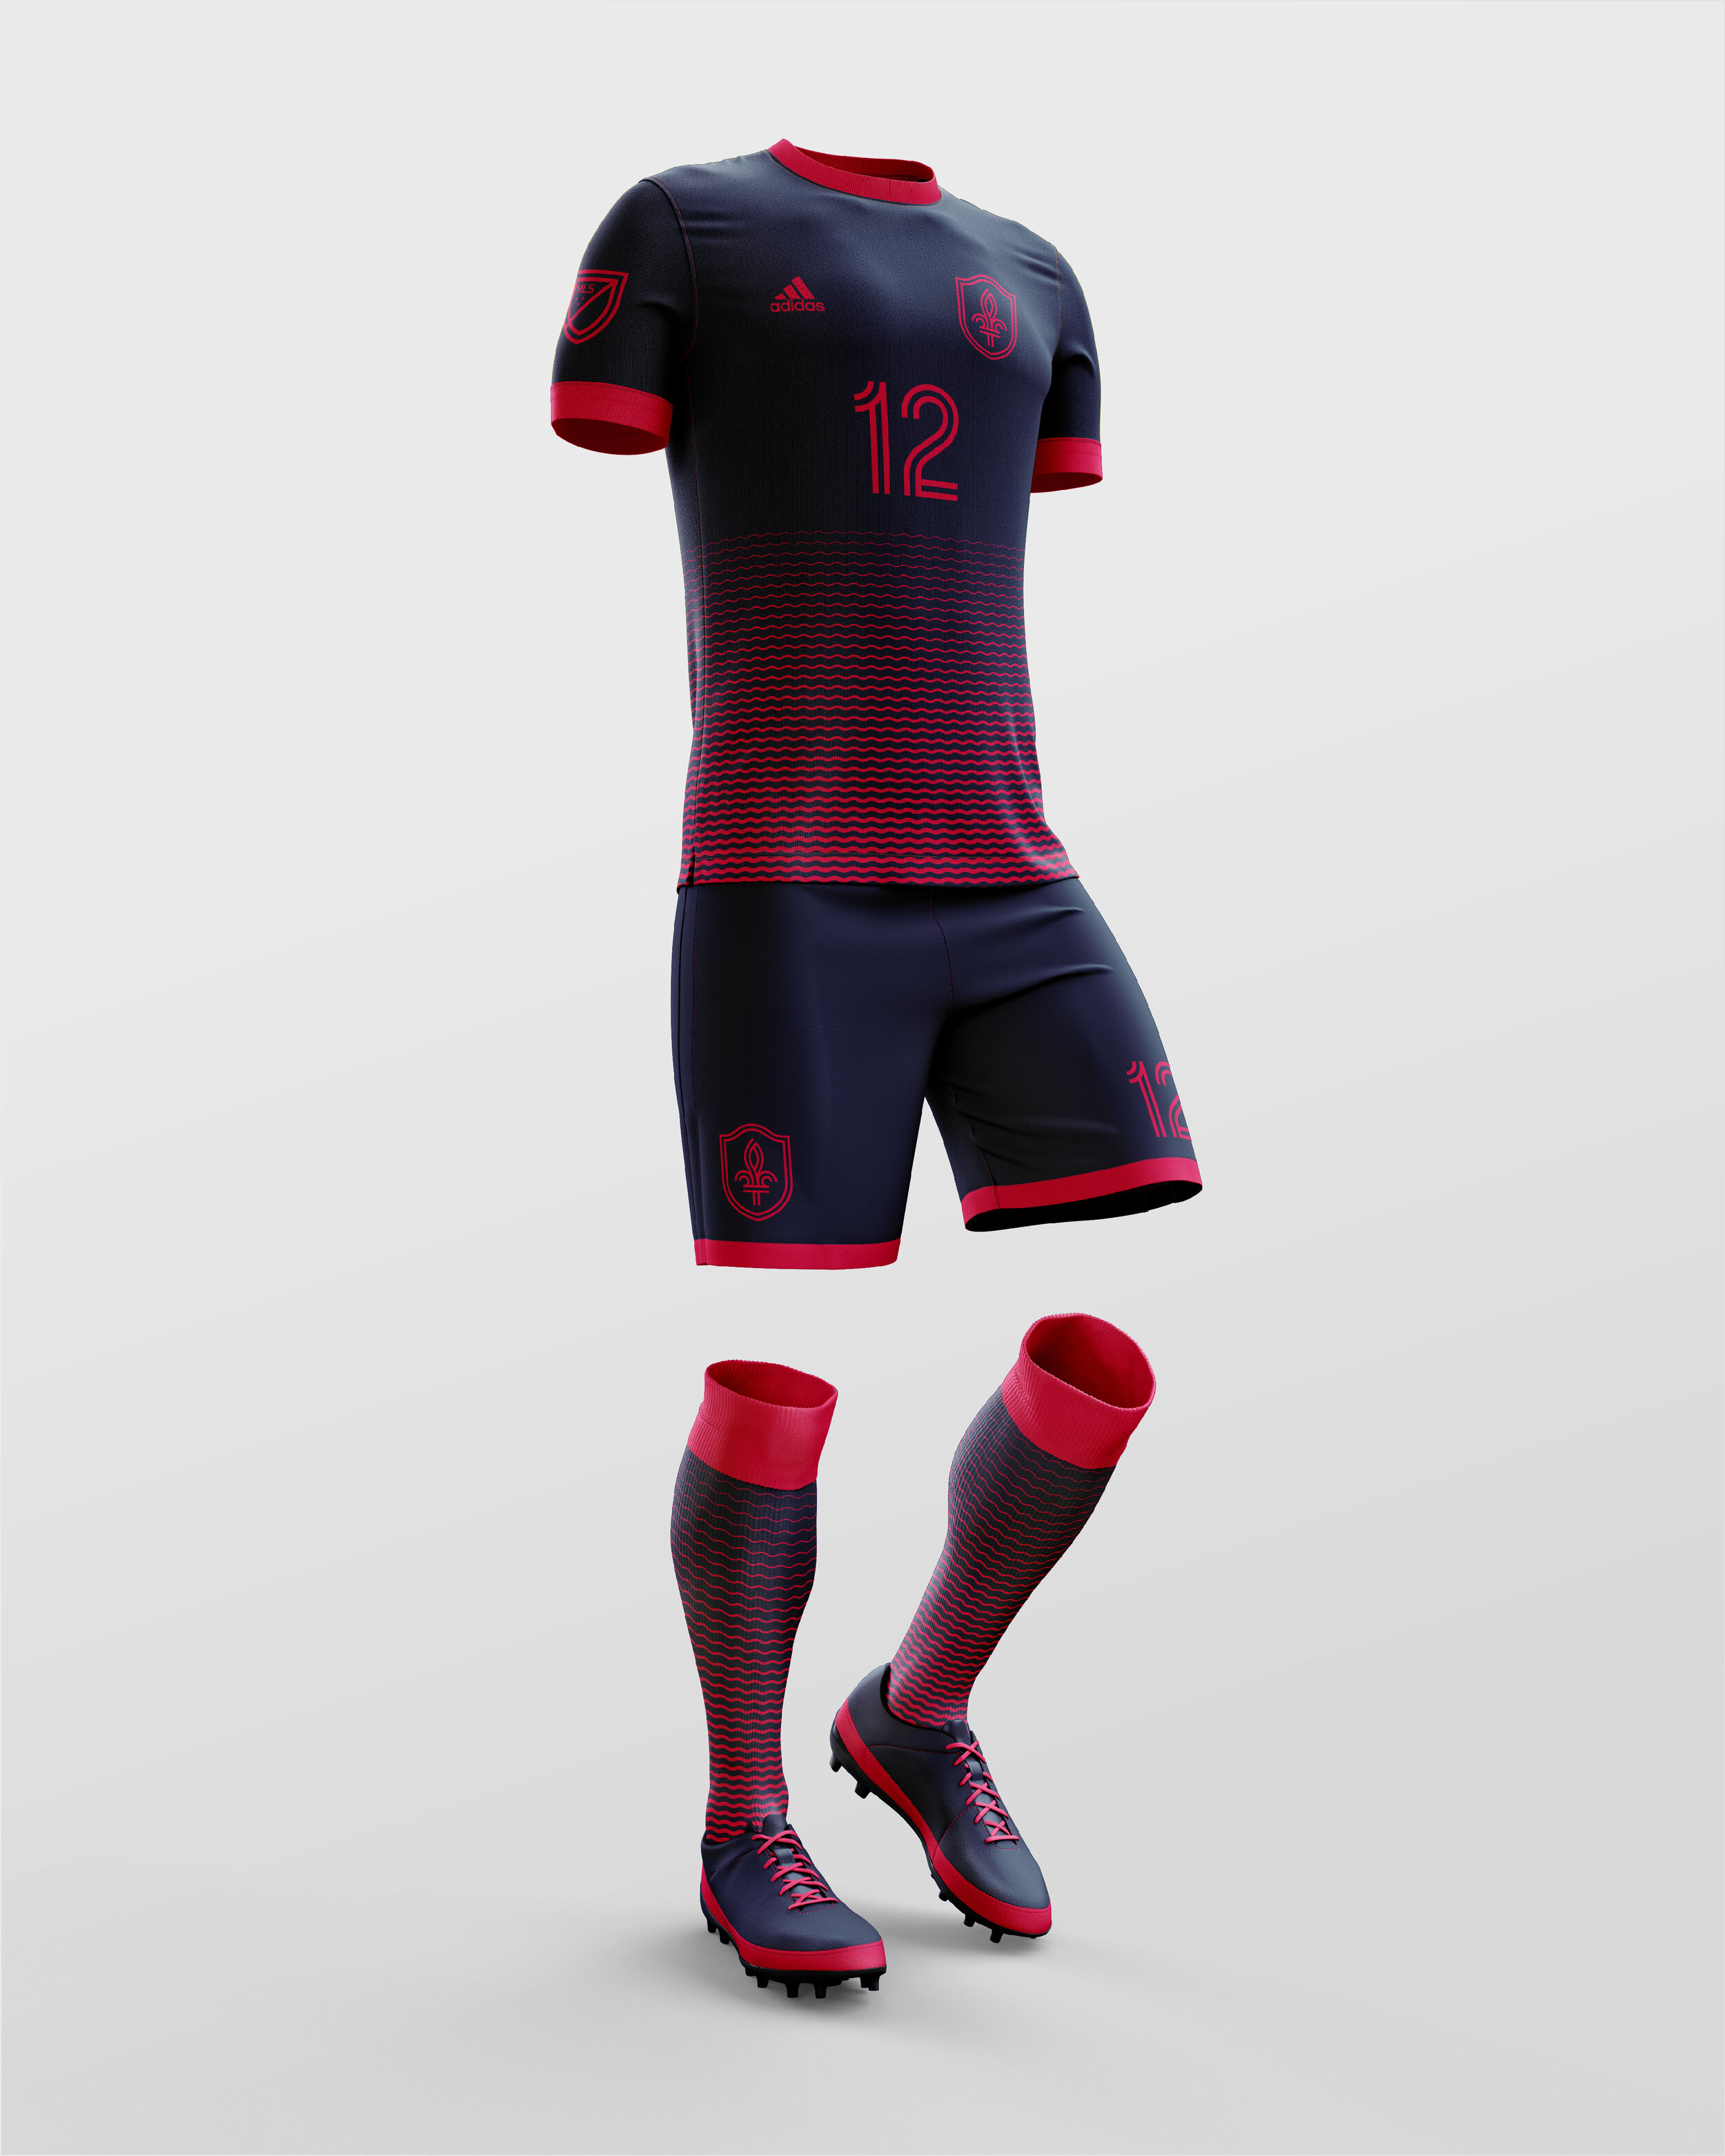 STL City SC uniform concept by FerryDesigns : r/MLS